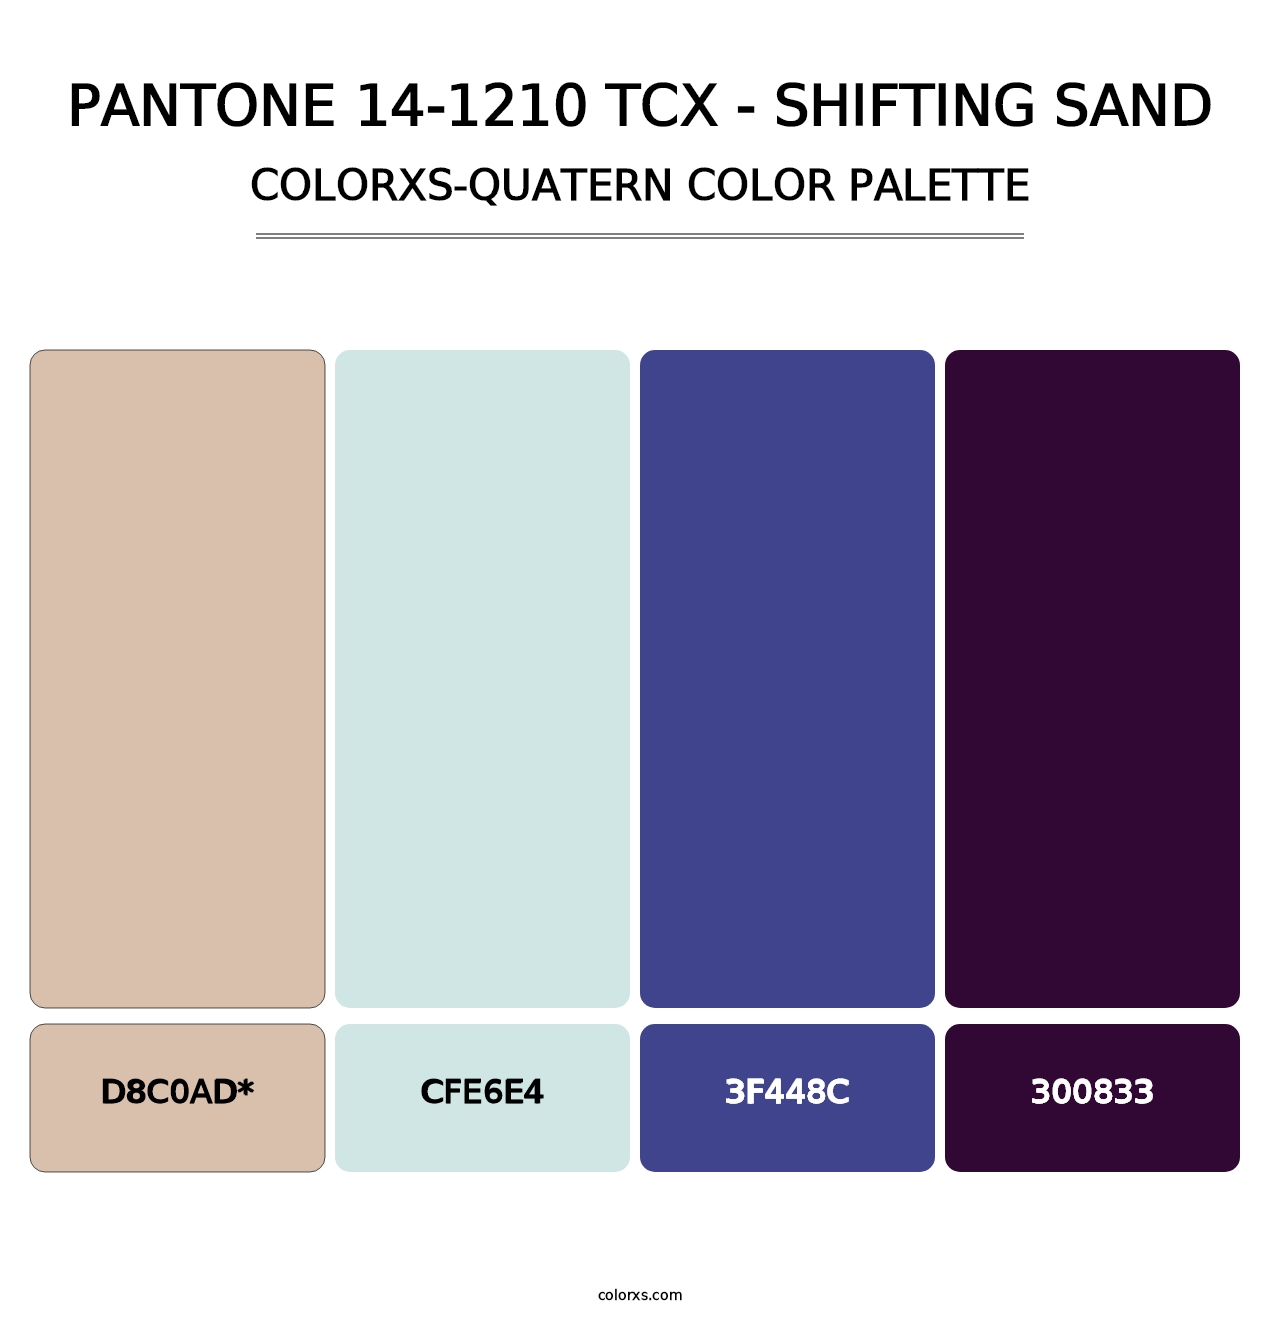 PANTONE 14-1210 TCX - Shifting Sand - Colorxs Quatern Palette